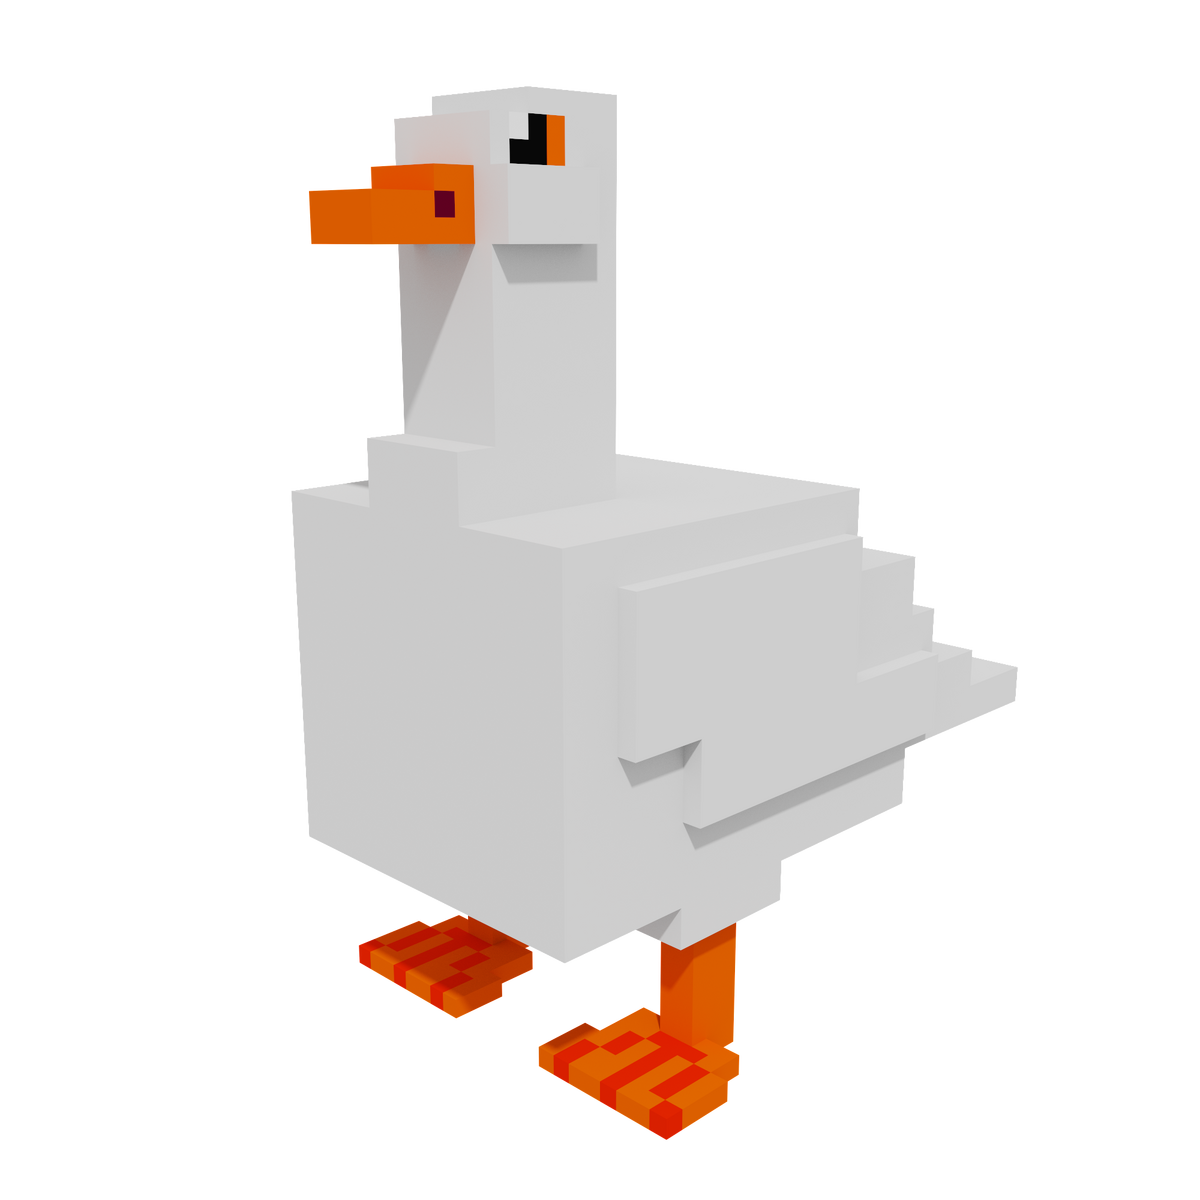 The LizardRock - Untitled Chicken Mod recreates Goose Game in Minecraft